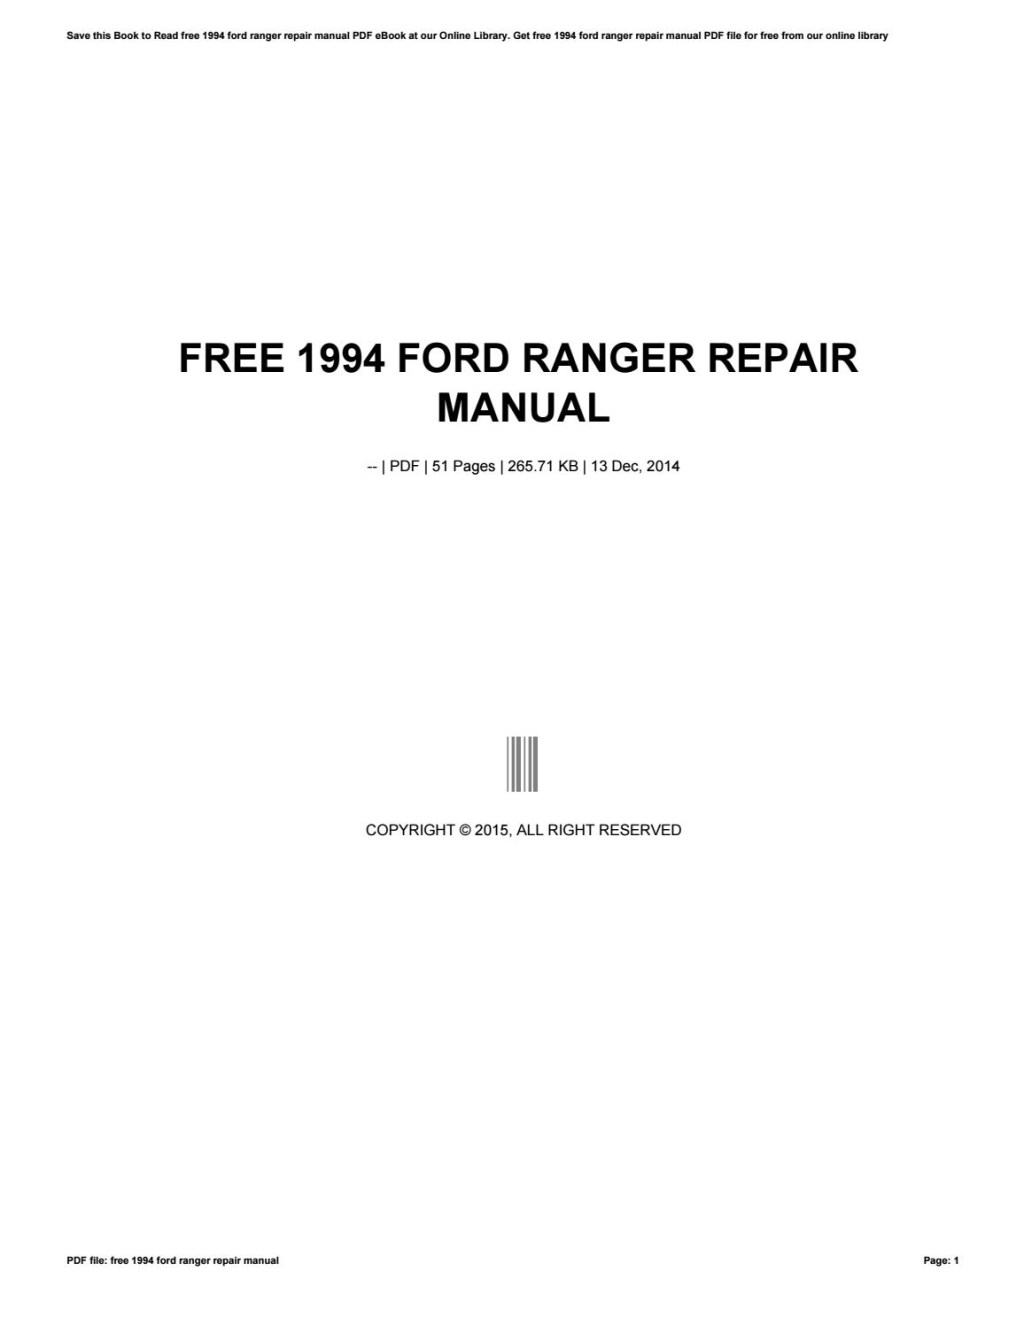 Picture of: Free  ford ranger repair manual by fajaribnu – Issuu